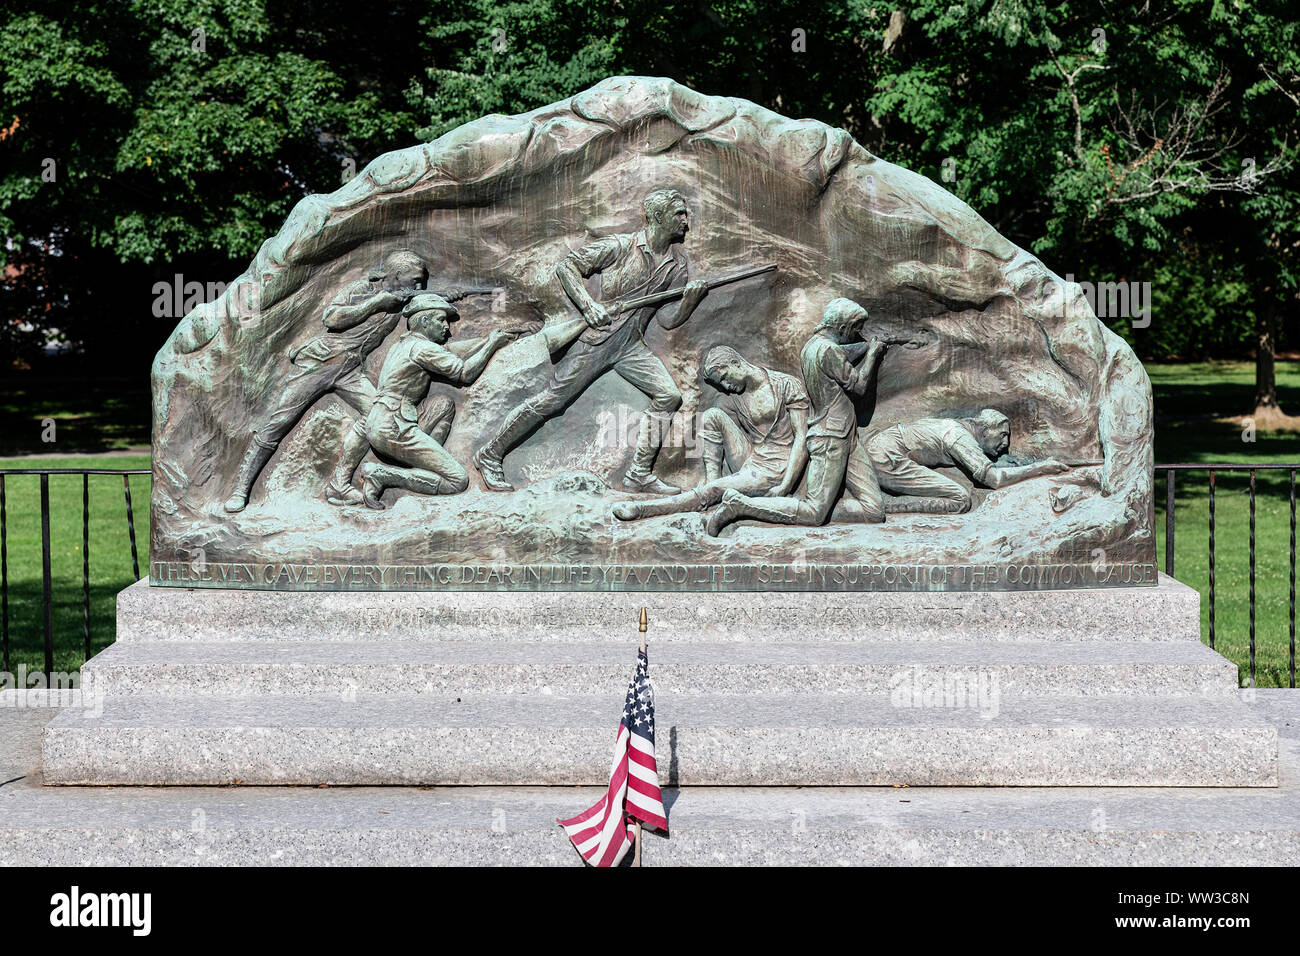 Minute Men memorial, Lexington, Massachusetts, USA Banque D'Images